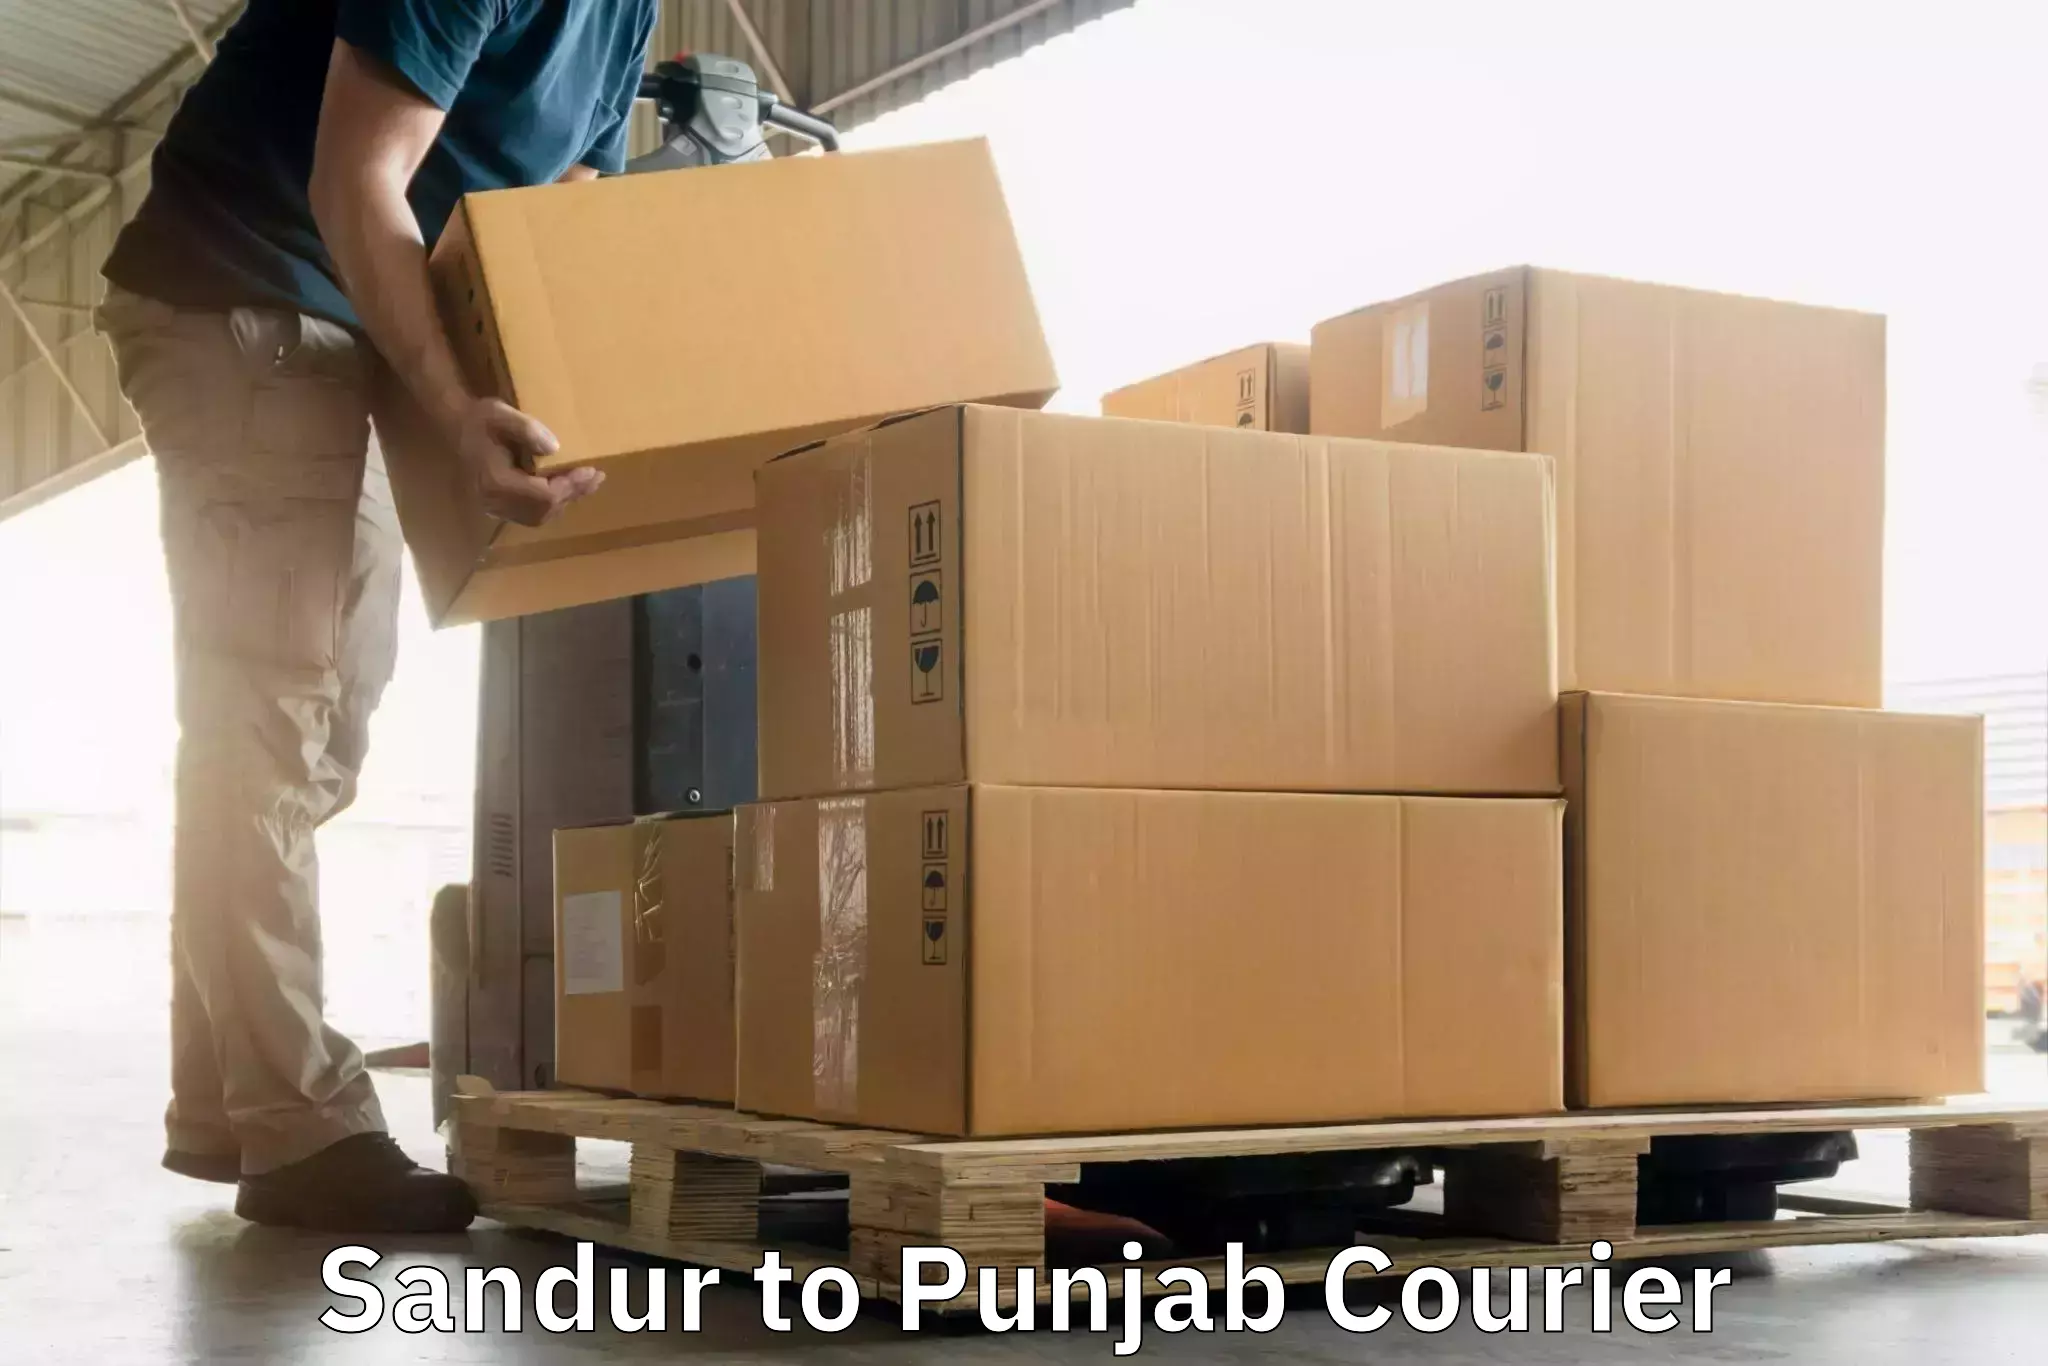 Advanced tracking systems Sandur to Central University of Punjab Bathinda